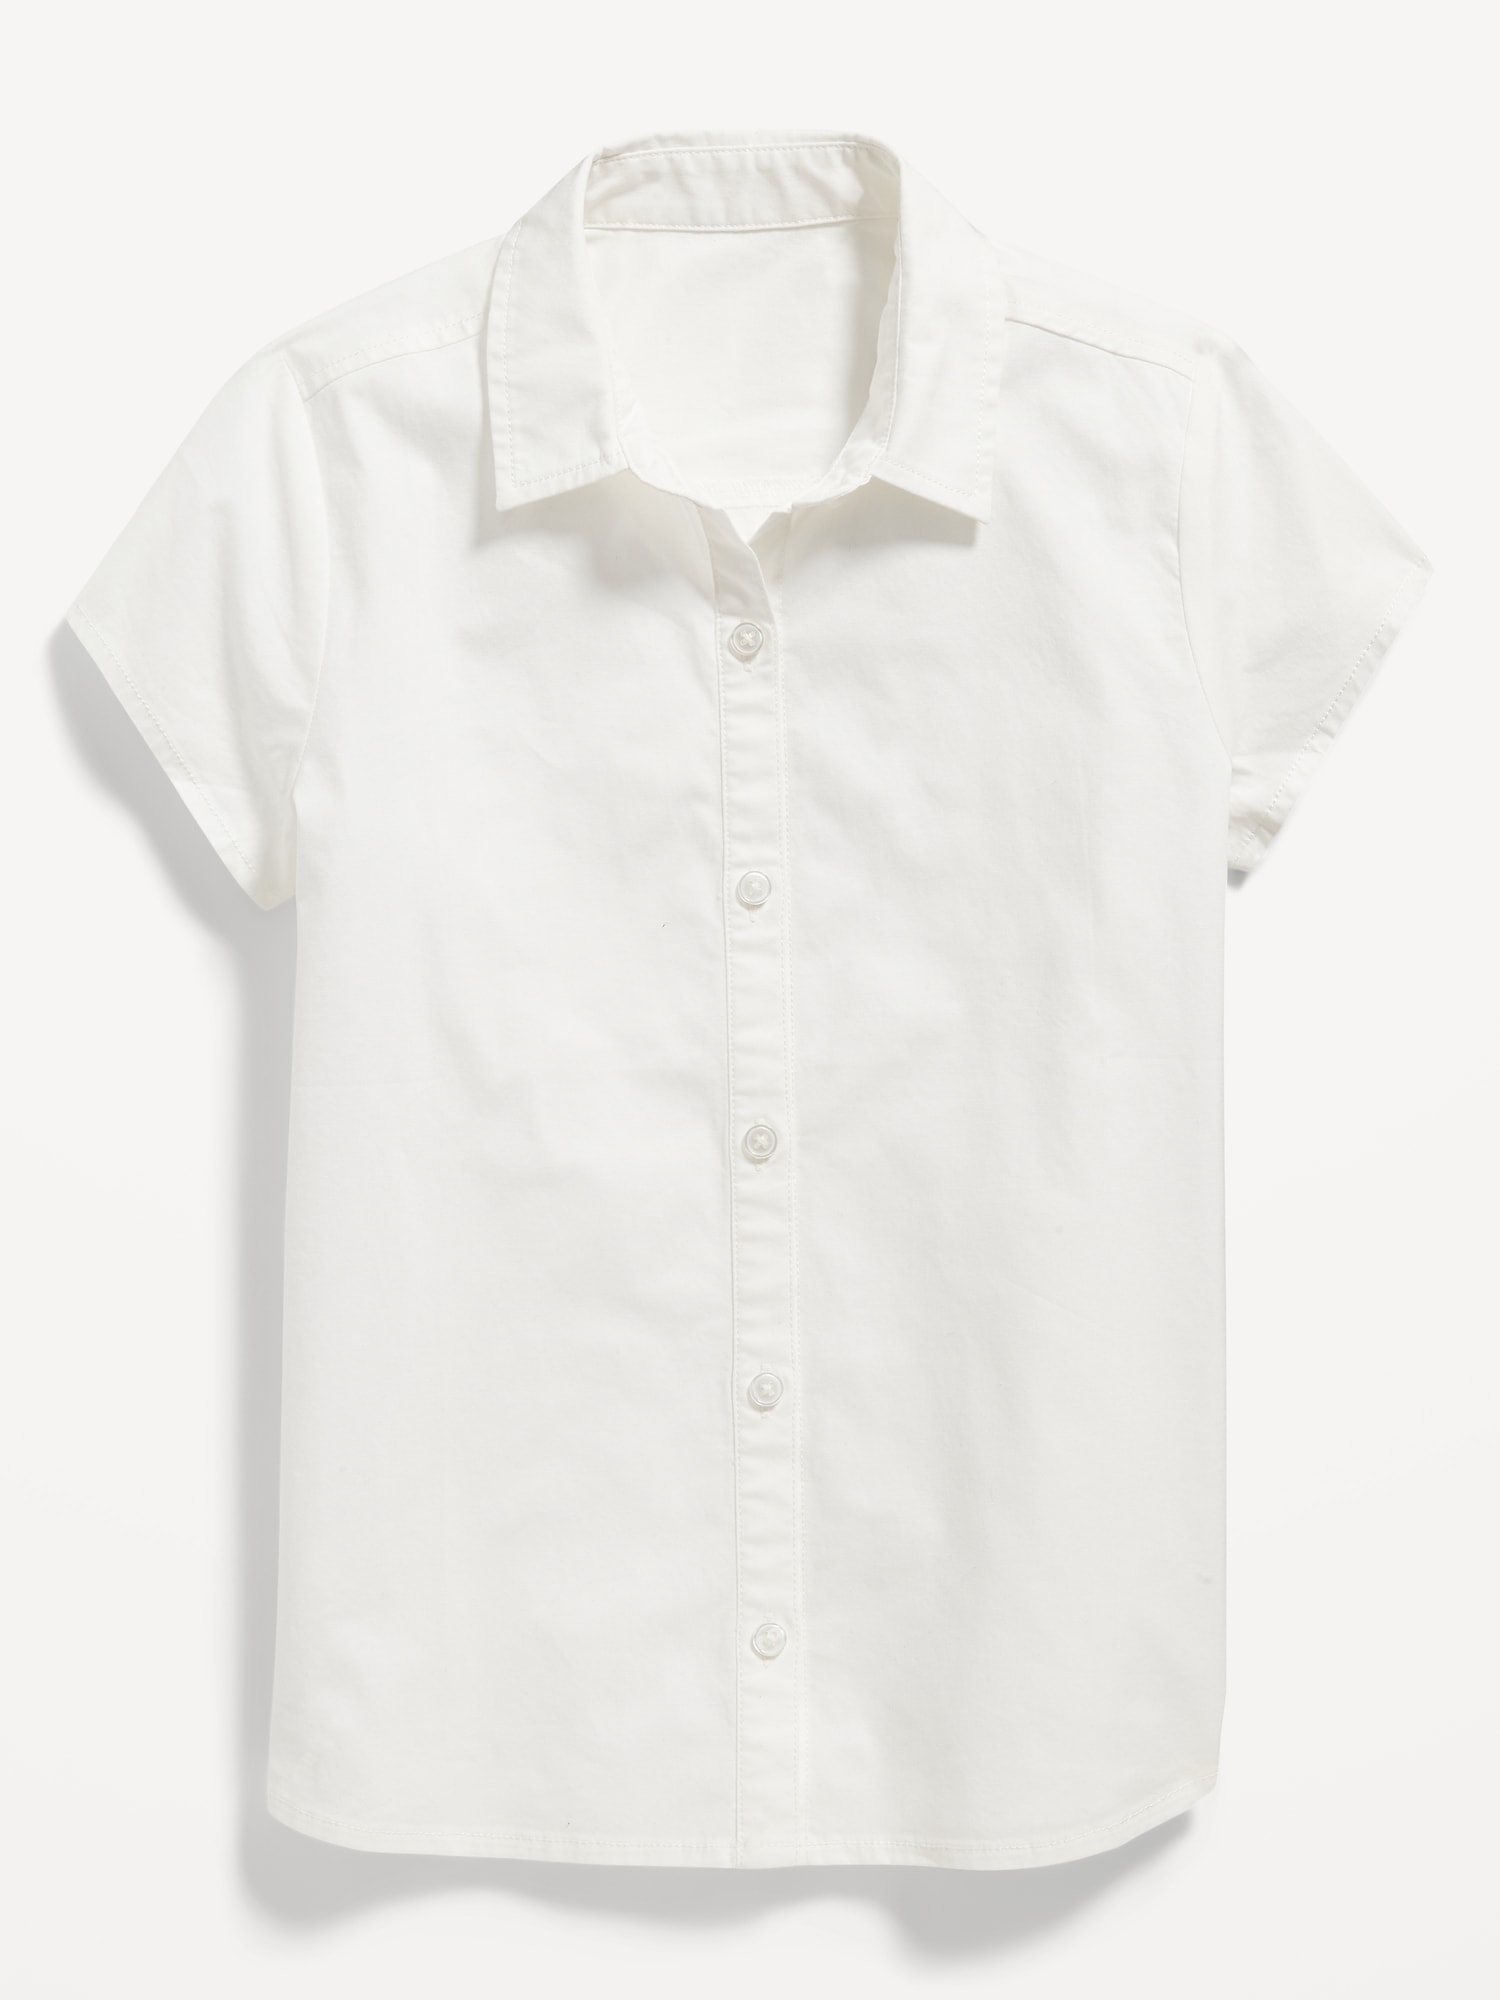 Old Navy School Uniform Short-Sleeve Shirt for Girls white. 1